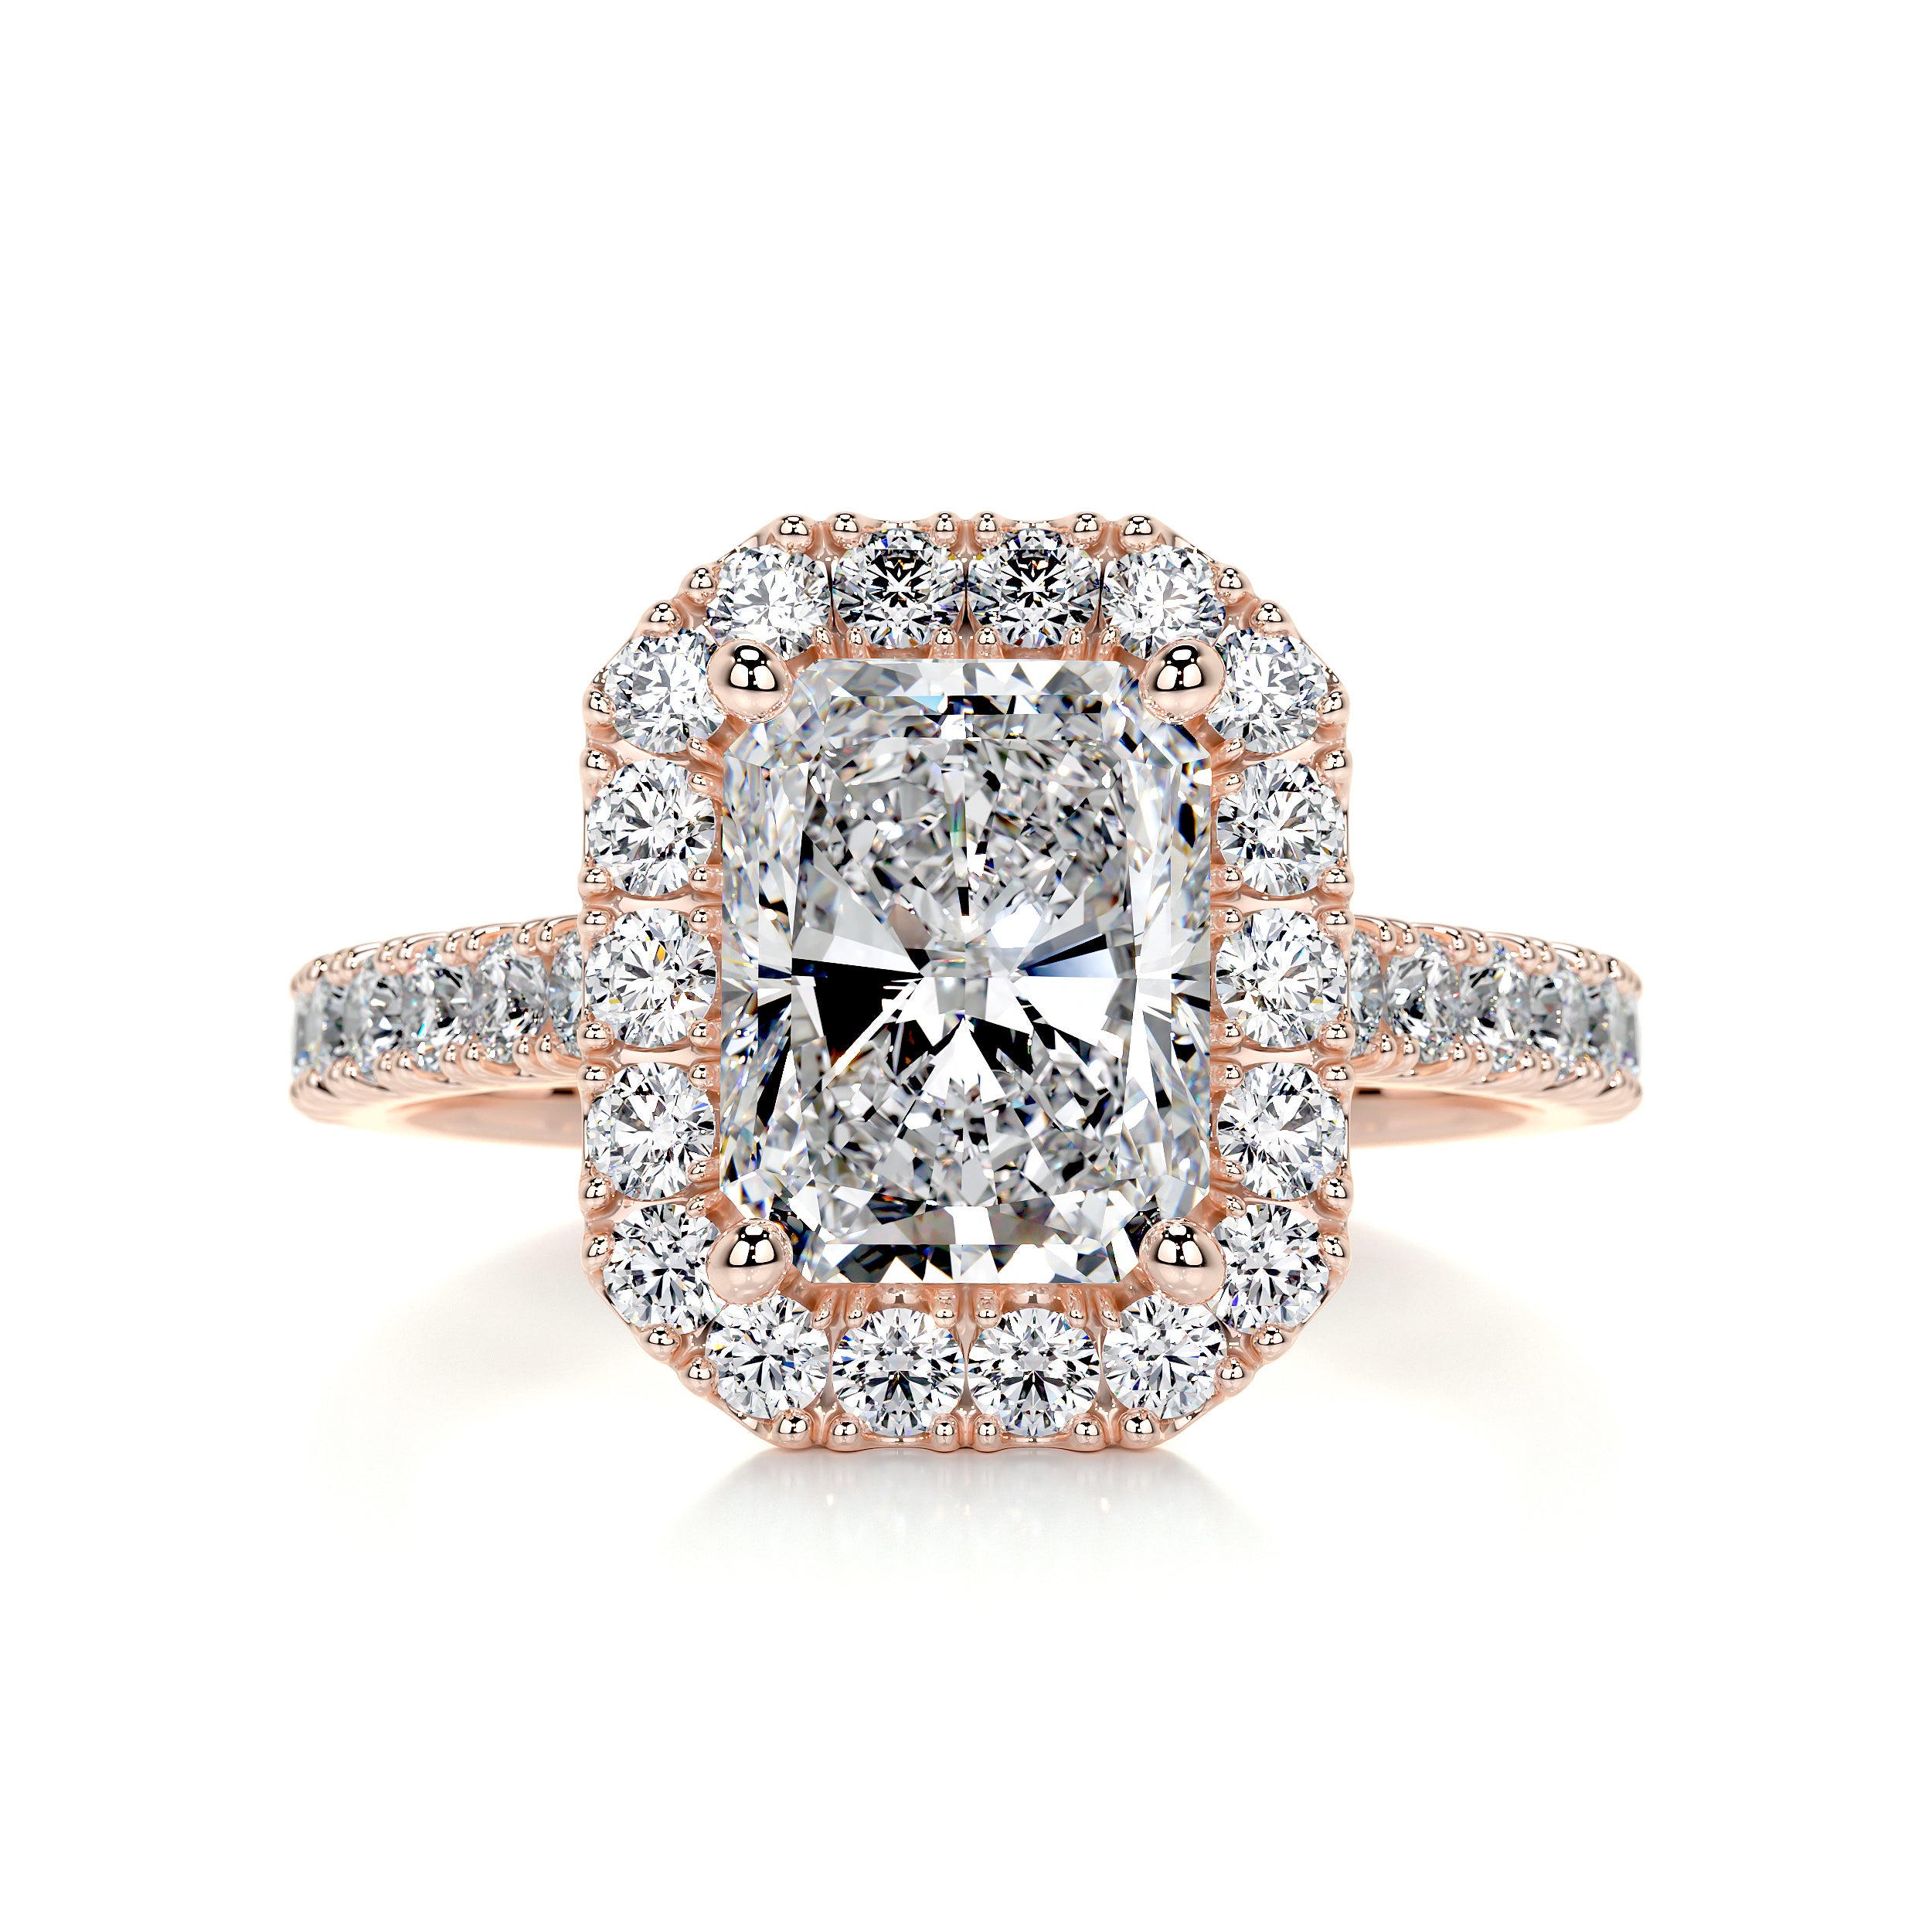 Andrea Diamond Engagement Ring   (2.25 Carat) -14K Rose Gold